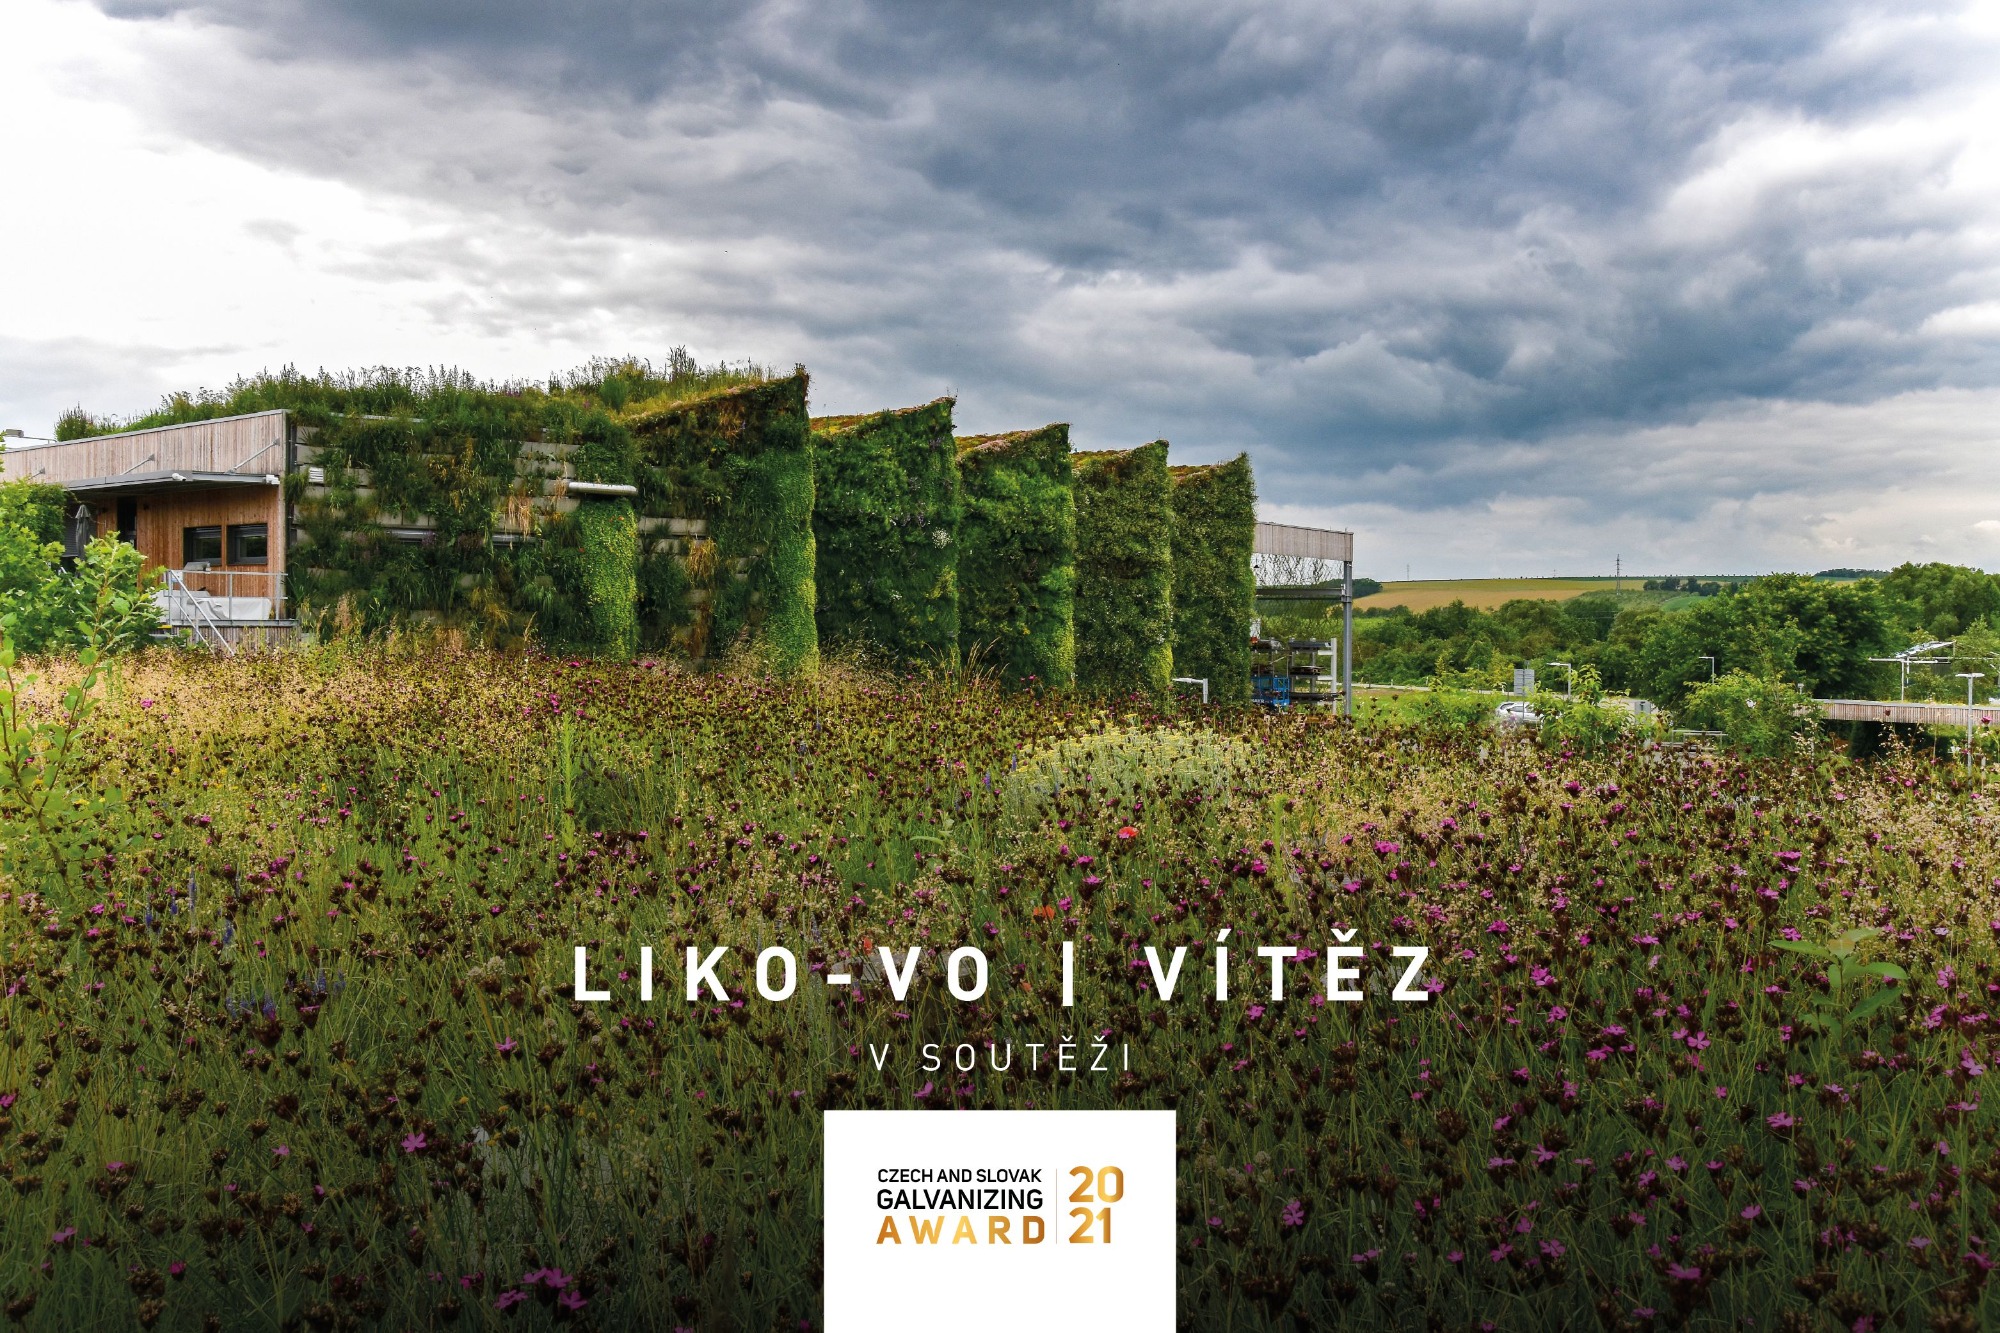 A LIKO-Vo élő csarnok lett a Czech and Slovak Galvanizing Award 2021 győztese